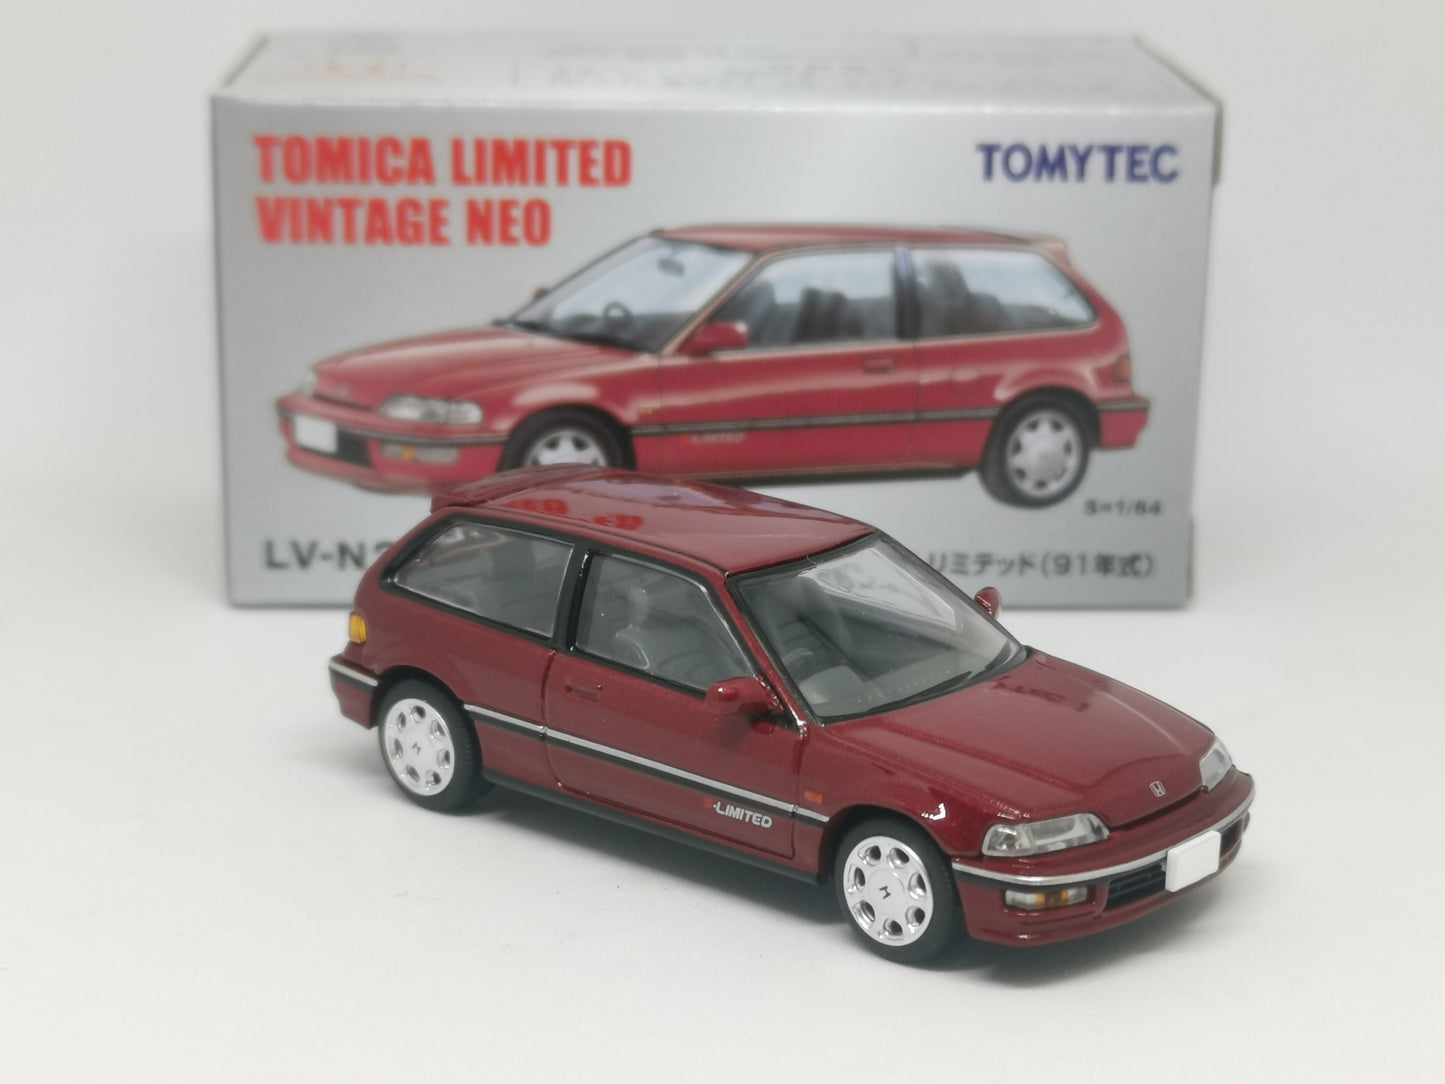 Tomica Limited Vintage Neo LV-N207b Honda Civic 25X-S